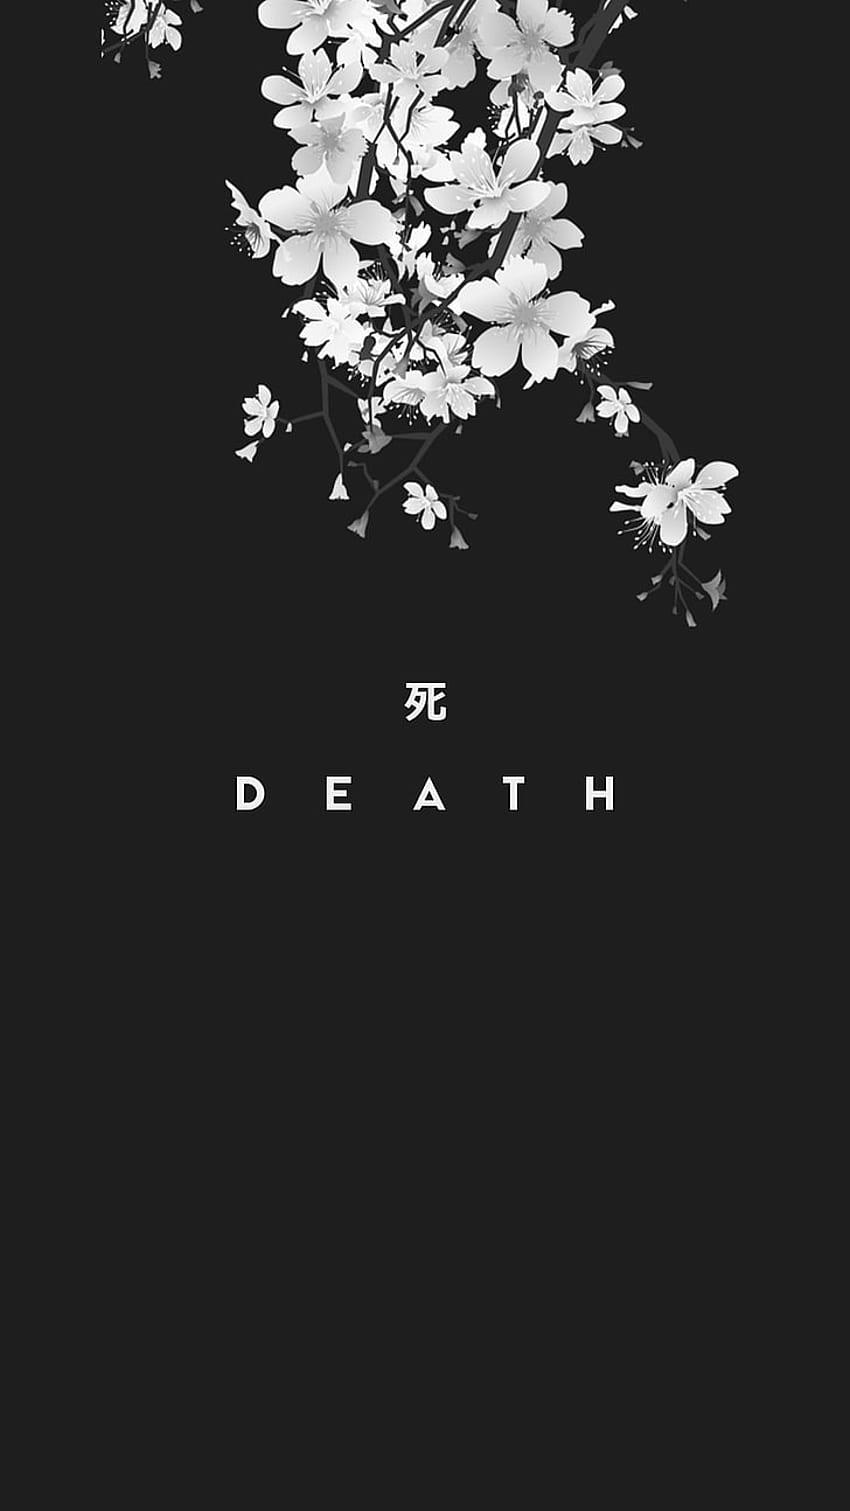 Latar belakang hitam dengan overlay teks death dark kanji Japan : Update, Anime Text wallpaper ponsel HD